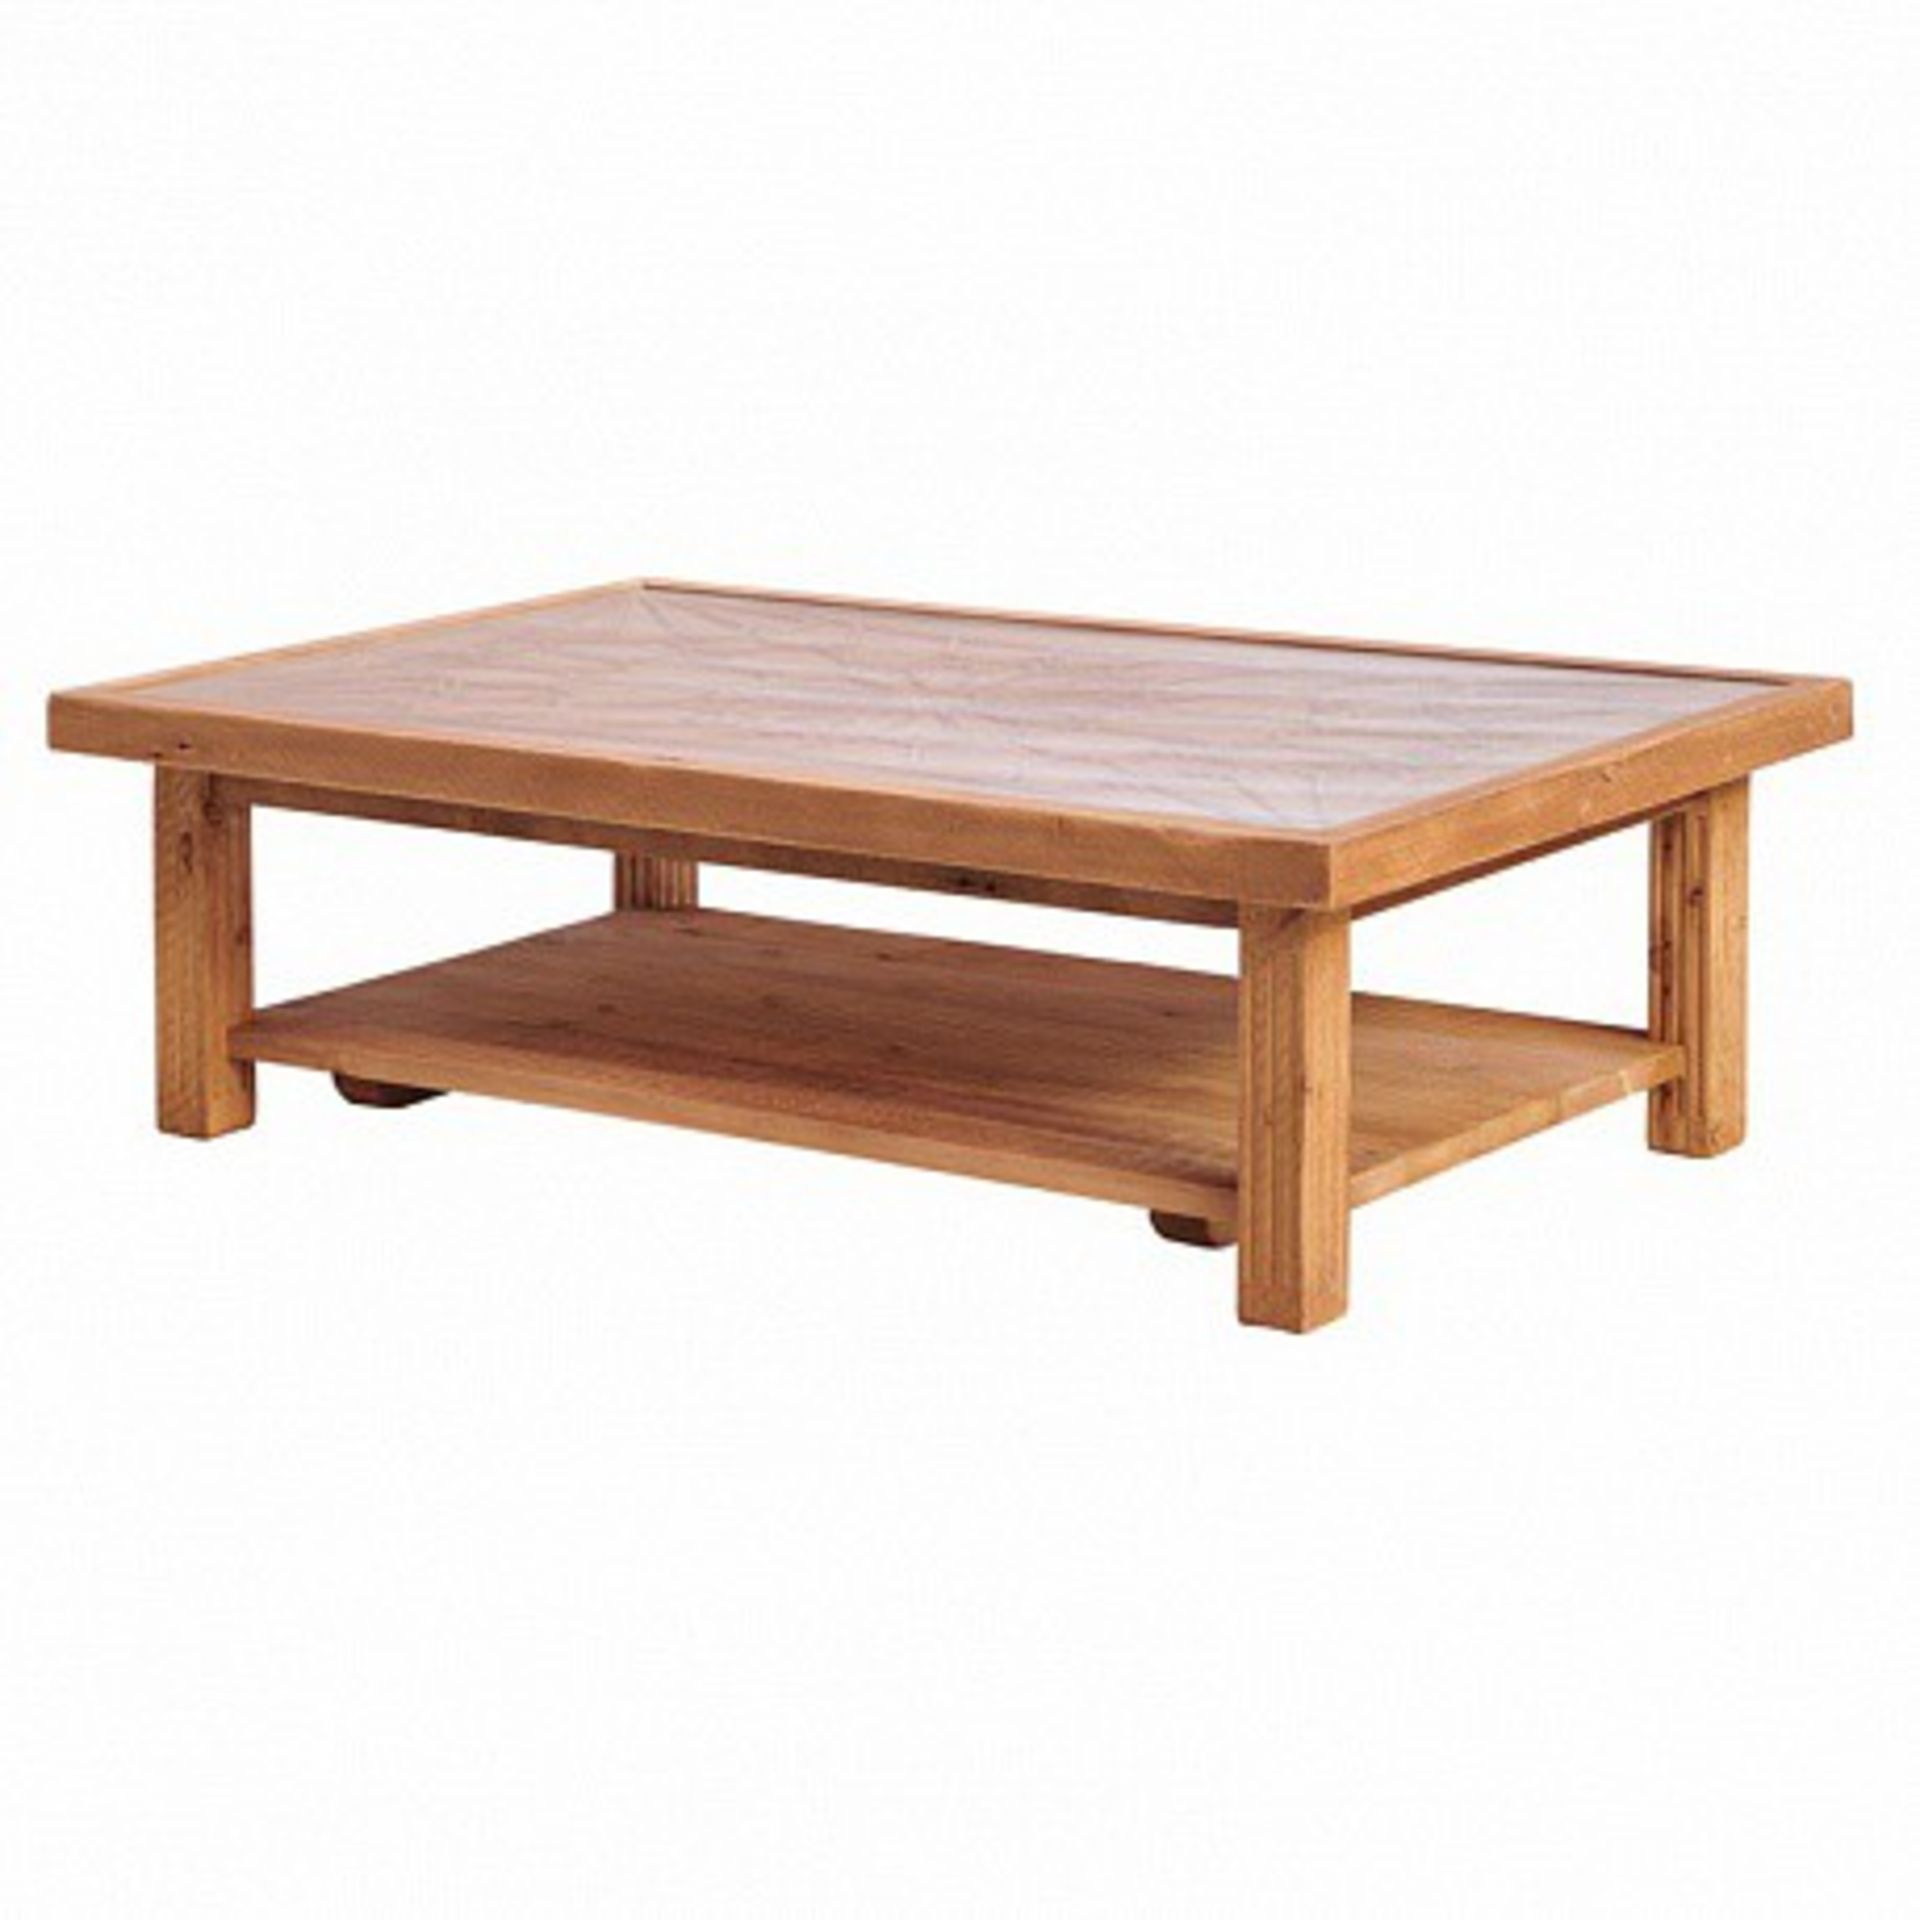 Universitas Coffee Table 150x90x45cm RRP £ 2841 - Image 2 of 2